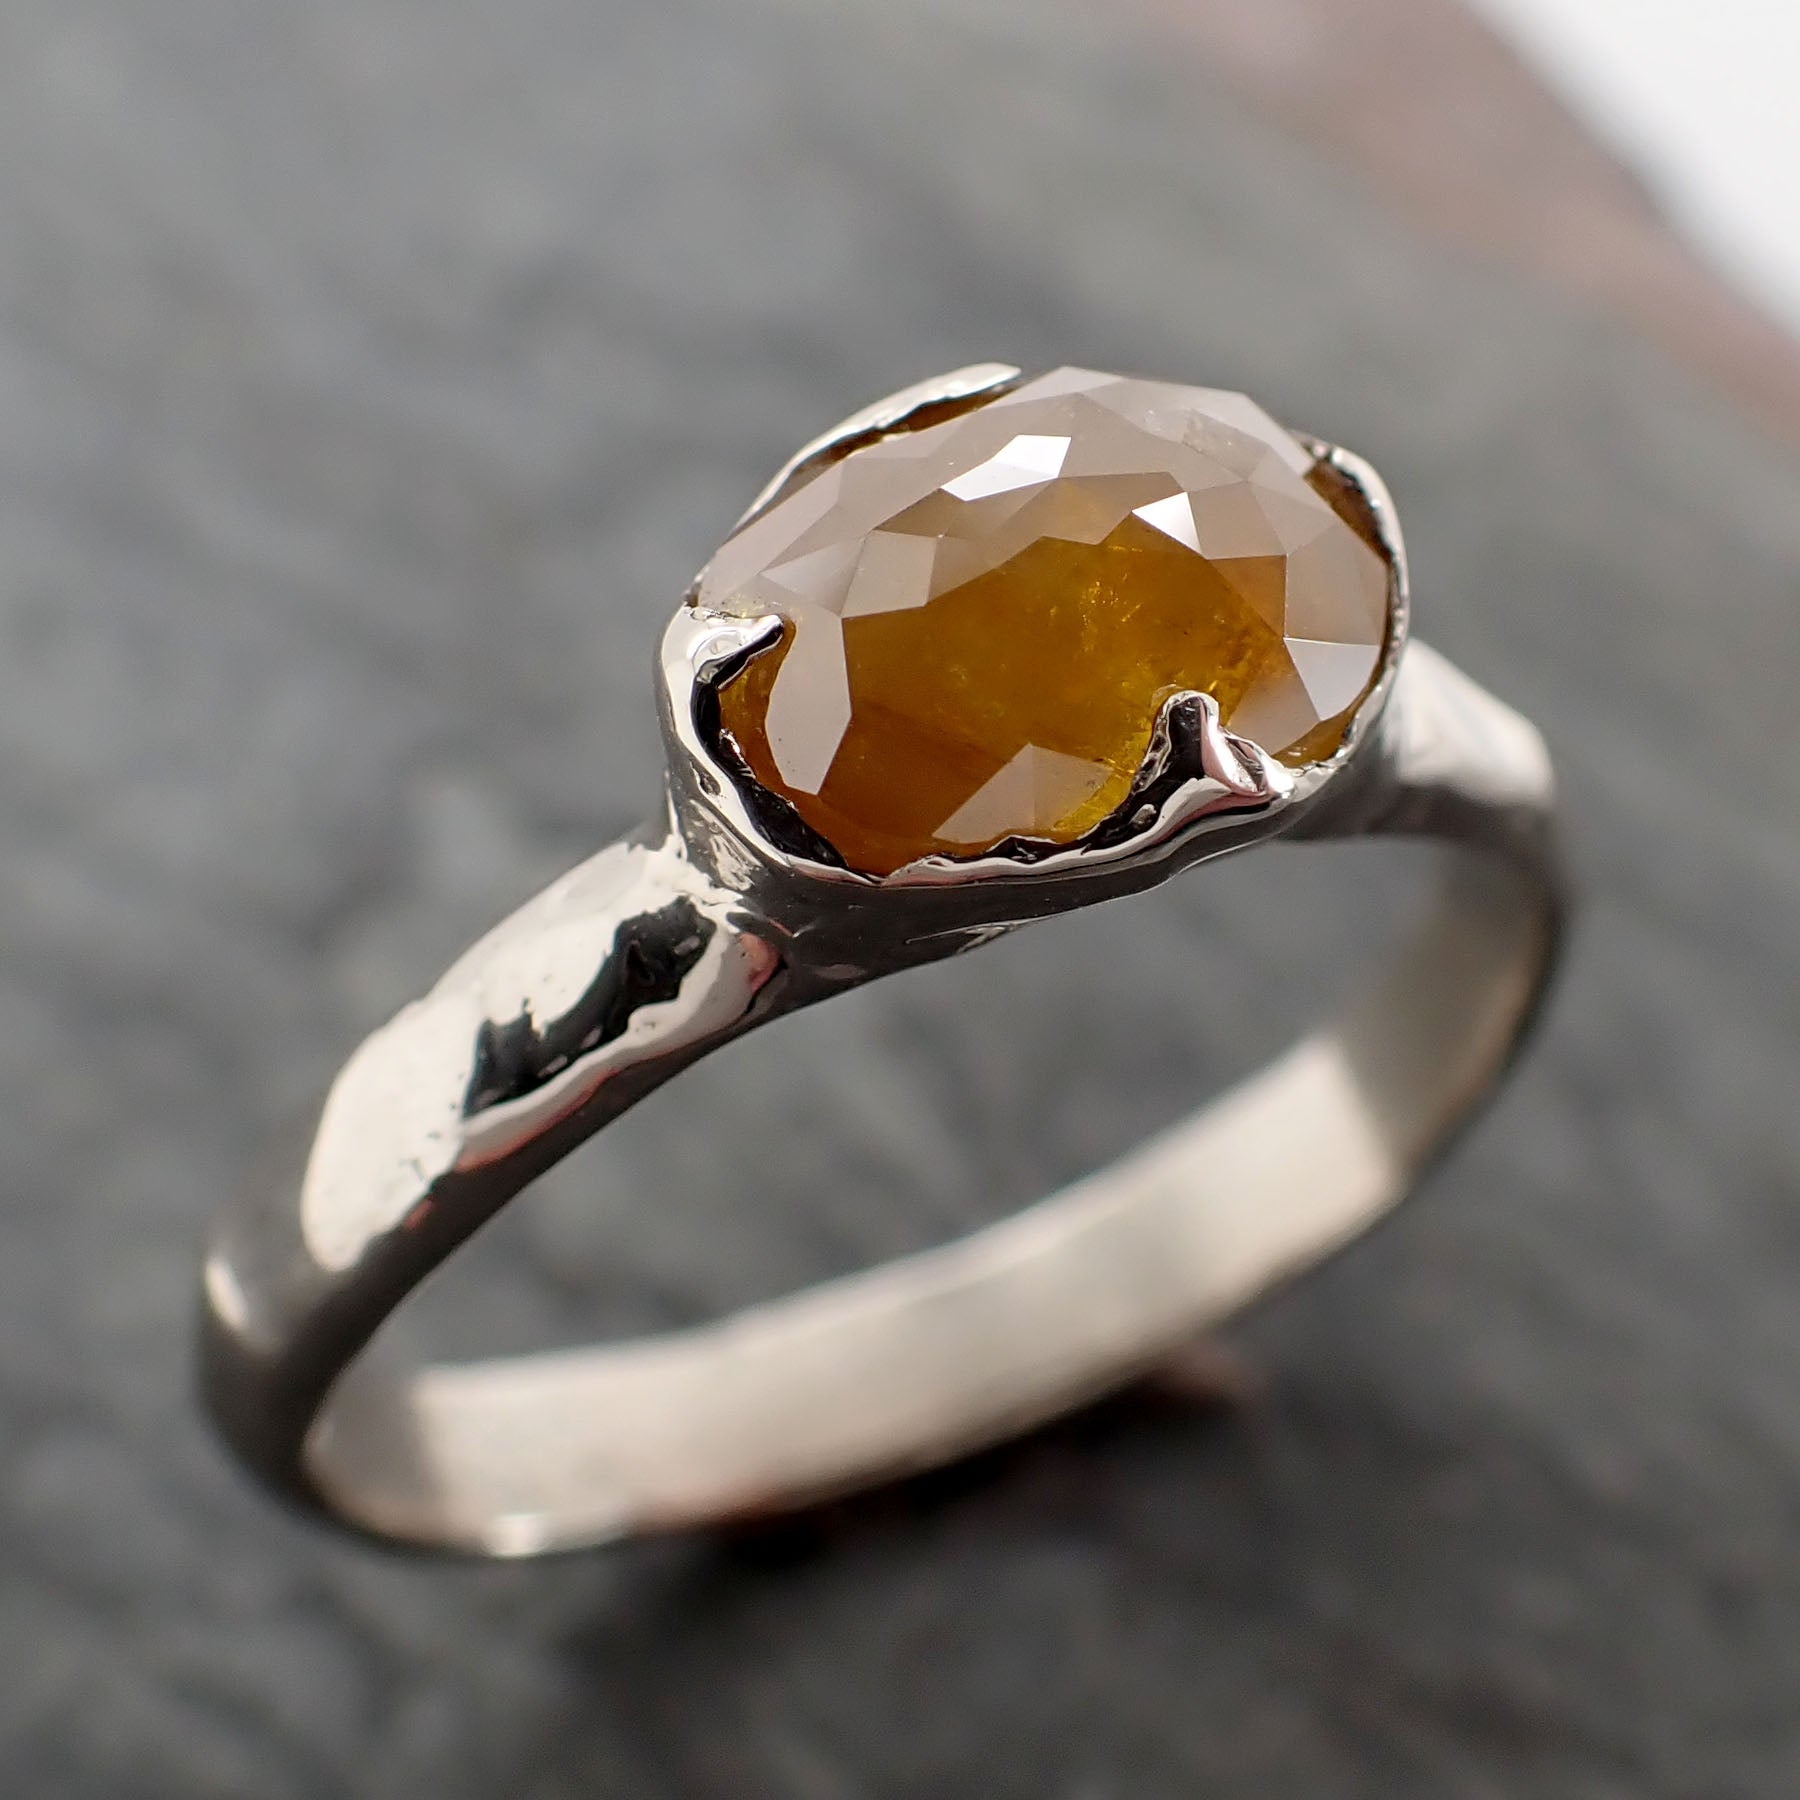 Fancy cut yellow Diamond Solitaire Engagement 14k White Gold Wedding Ring byAngeline 2835